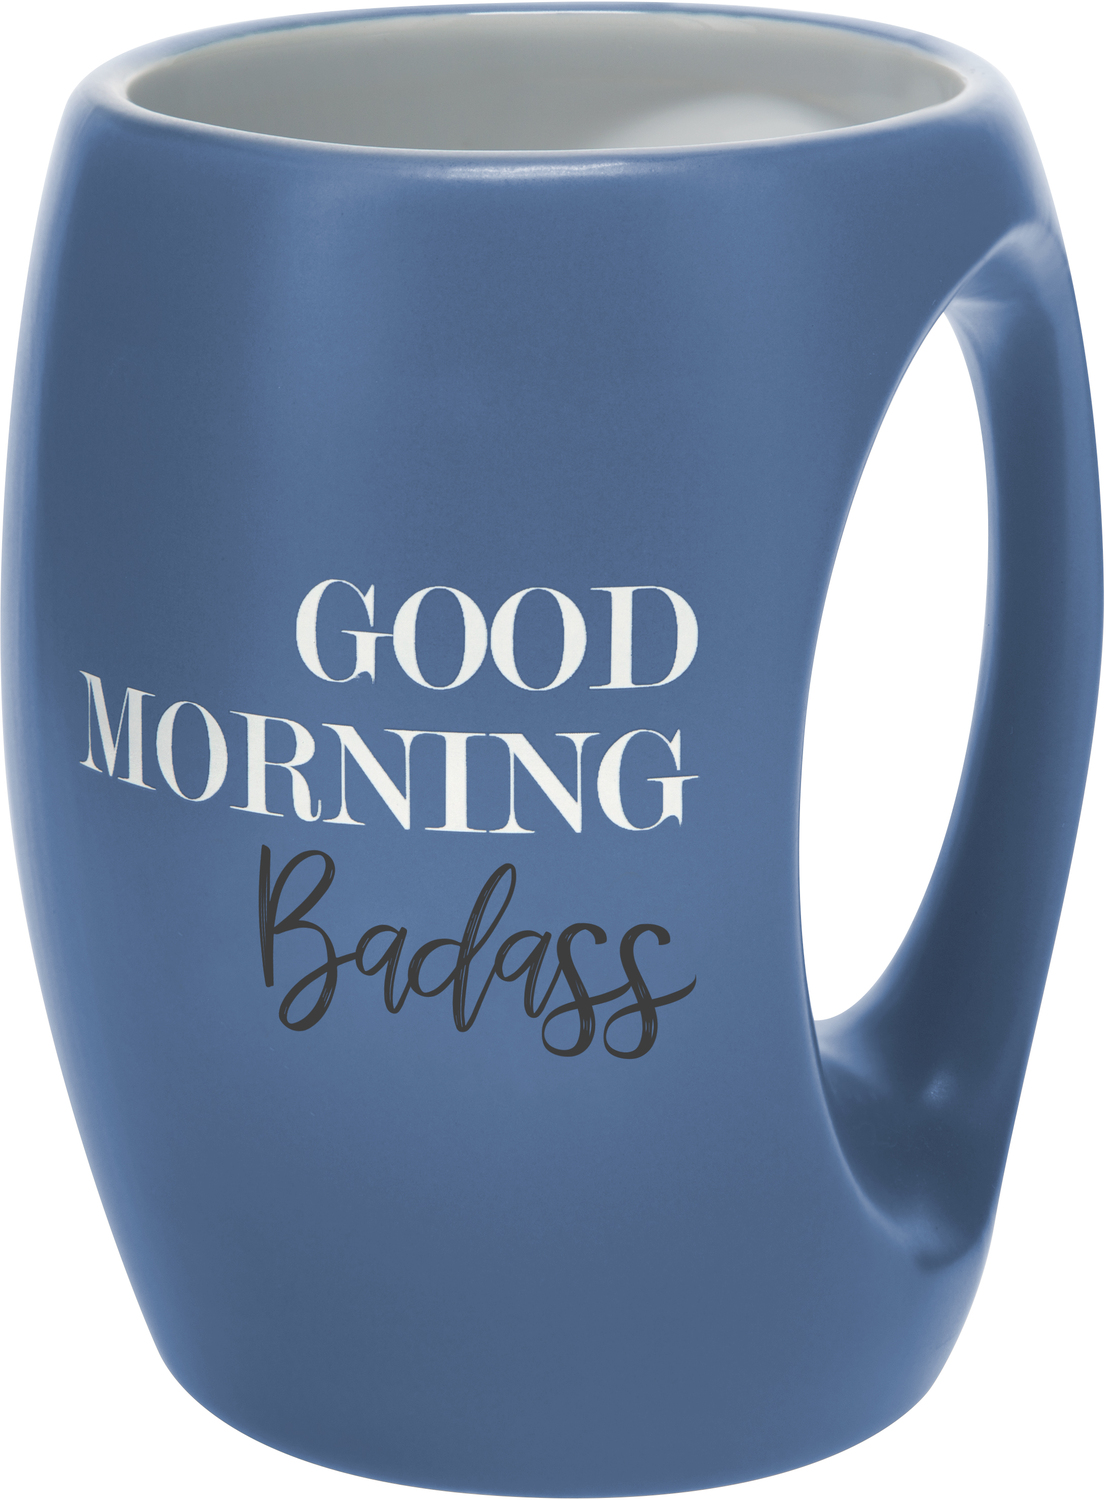 Badass by Good Morning - Badass - 16 oz Cup